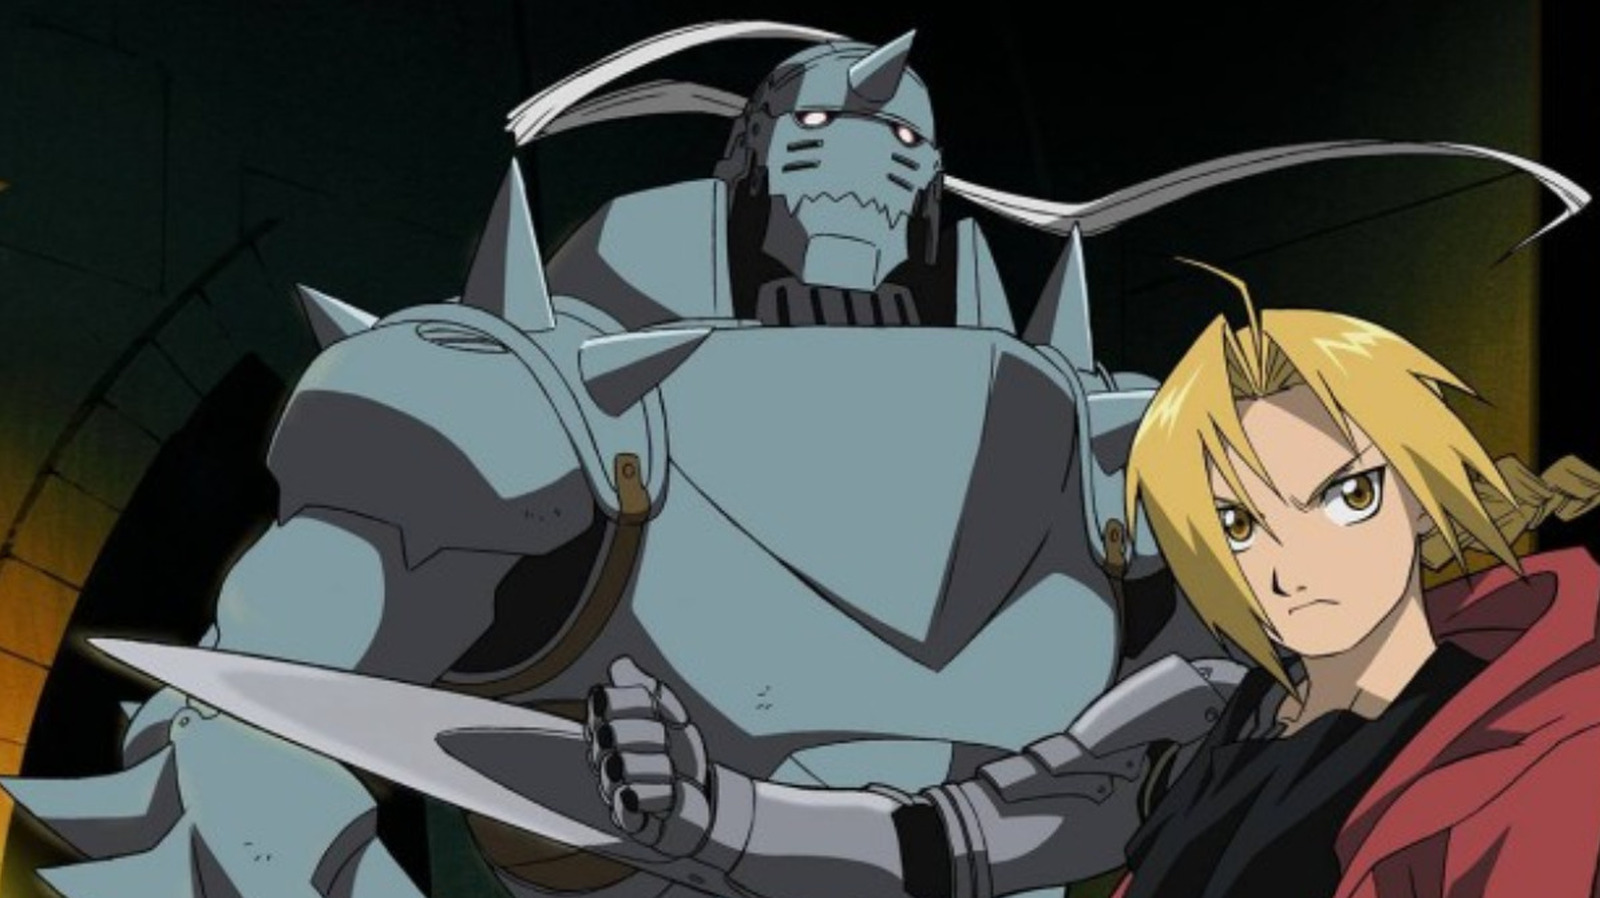 Fullmetal Alchemist Movie to Play in U.S. Theaters